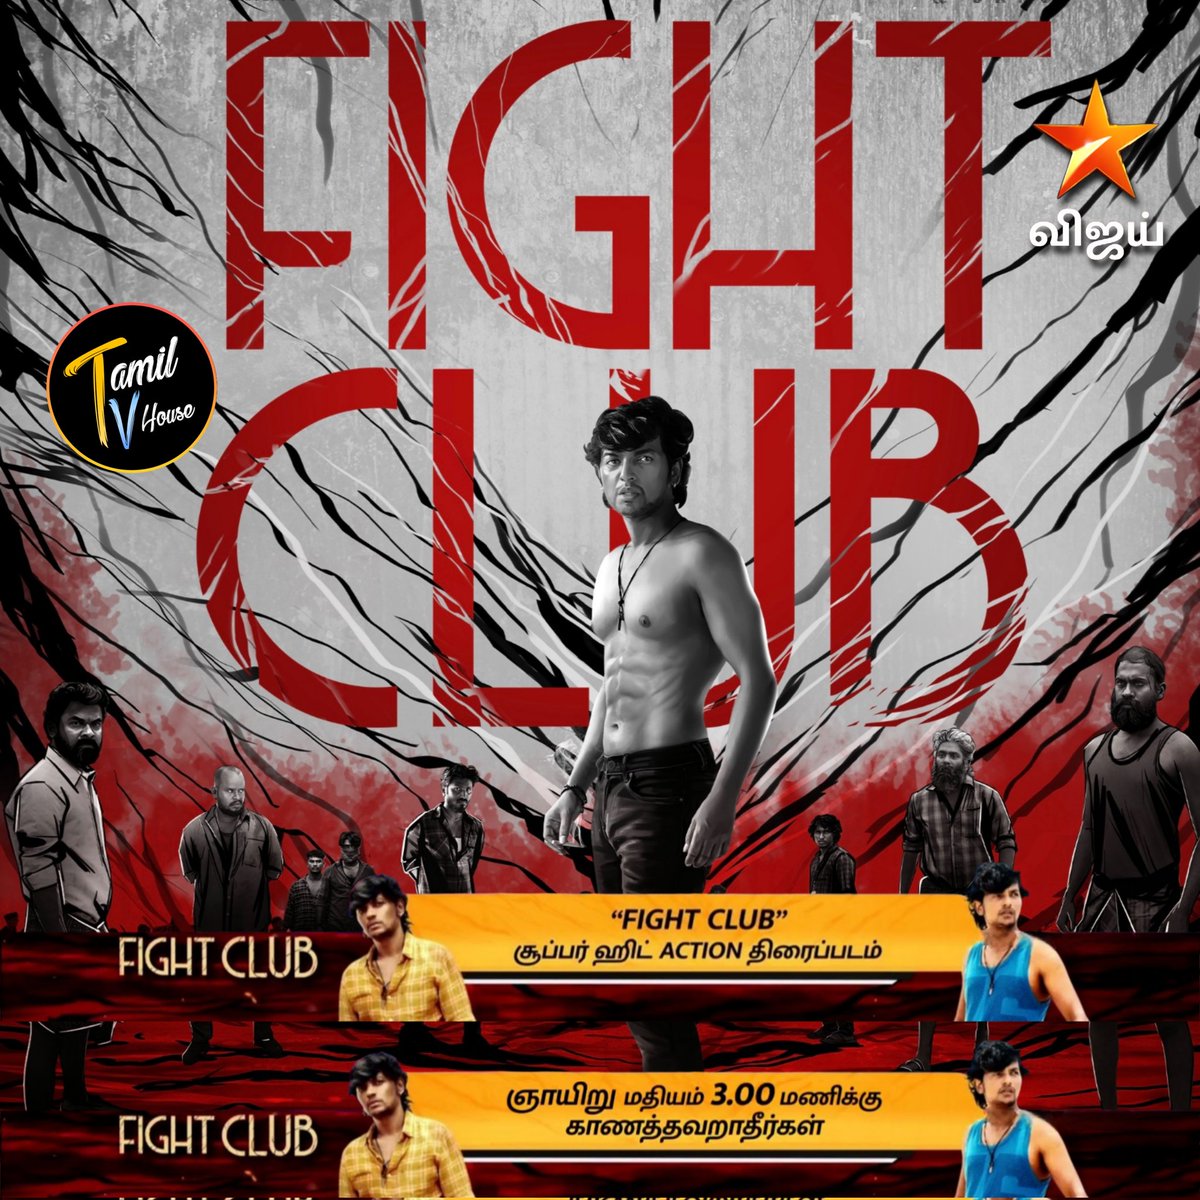 #FightClub World Television Premiere Sunday @ 3pm On #VijayTV ! #SAISANGO #TAMILTVHouse #VijayKumar #MonishaMohanMenon #LokeshKanagaraj #VijayTelevision